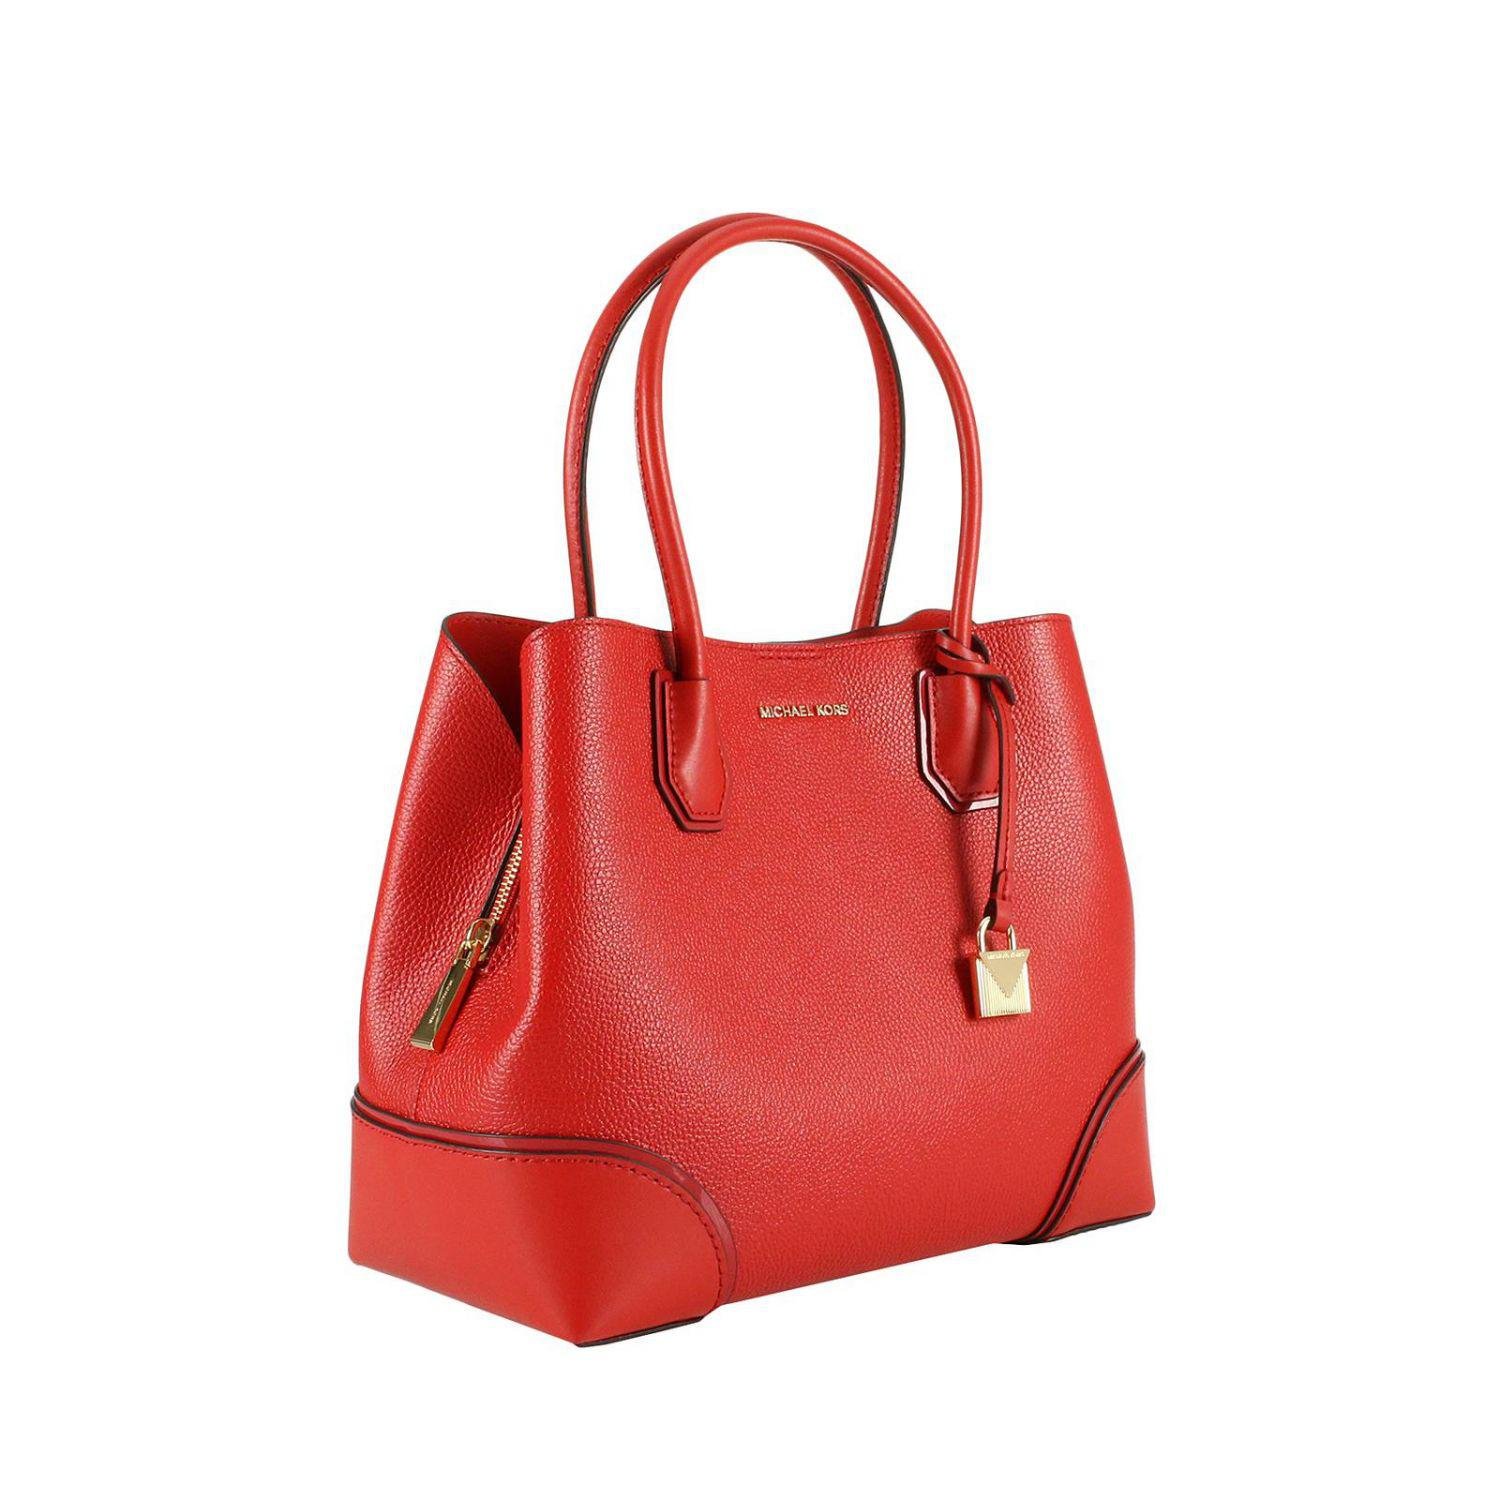 MICHAEL Michael Kors Leather Shoulder Bag Women in Red - Lyst